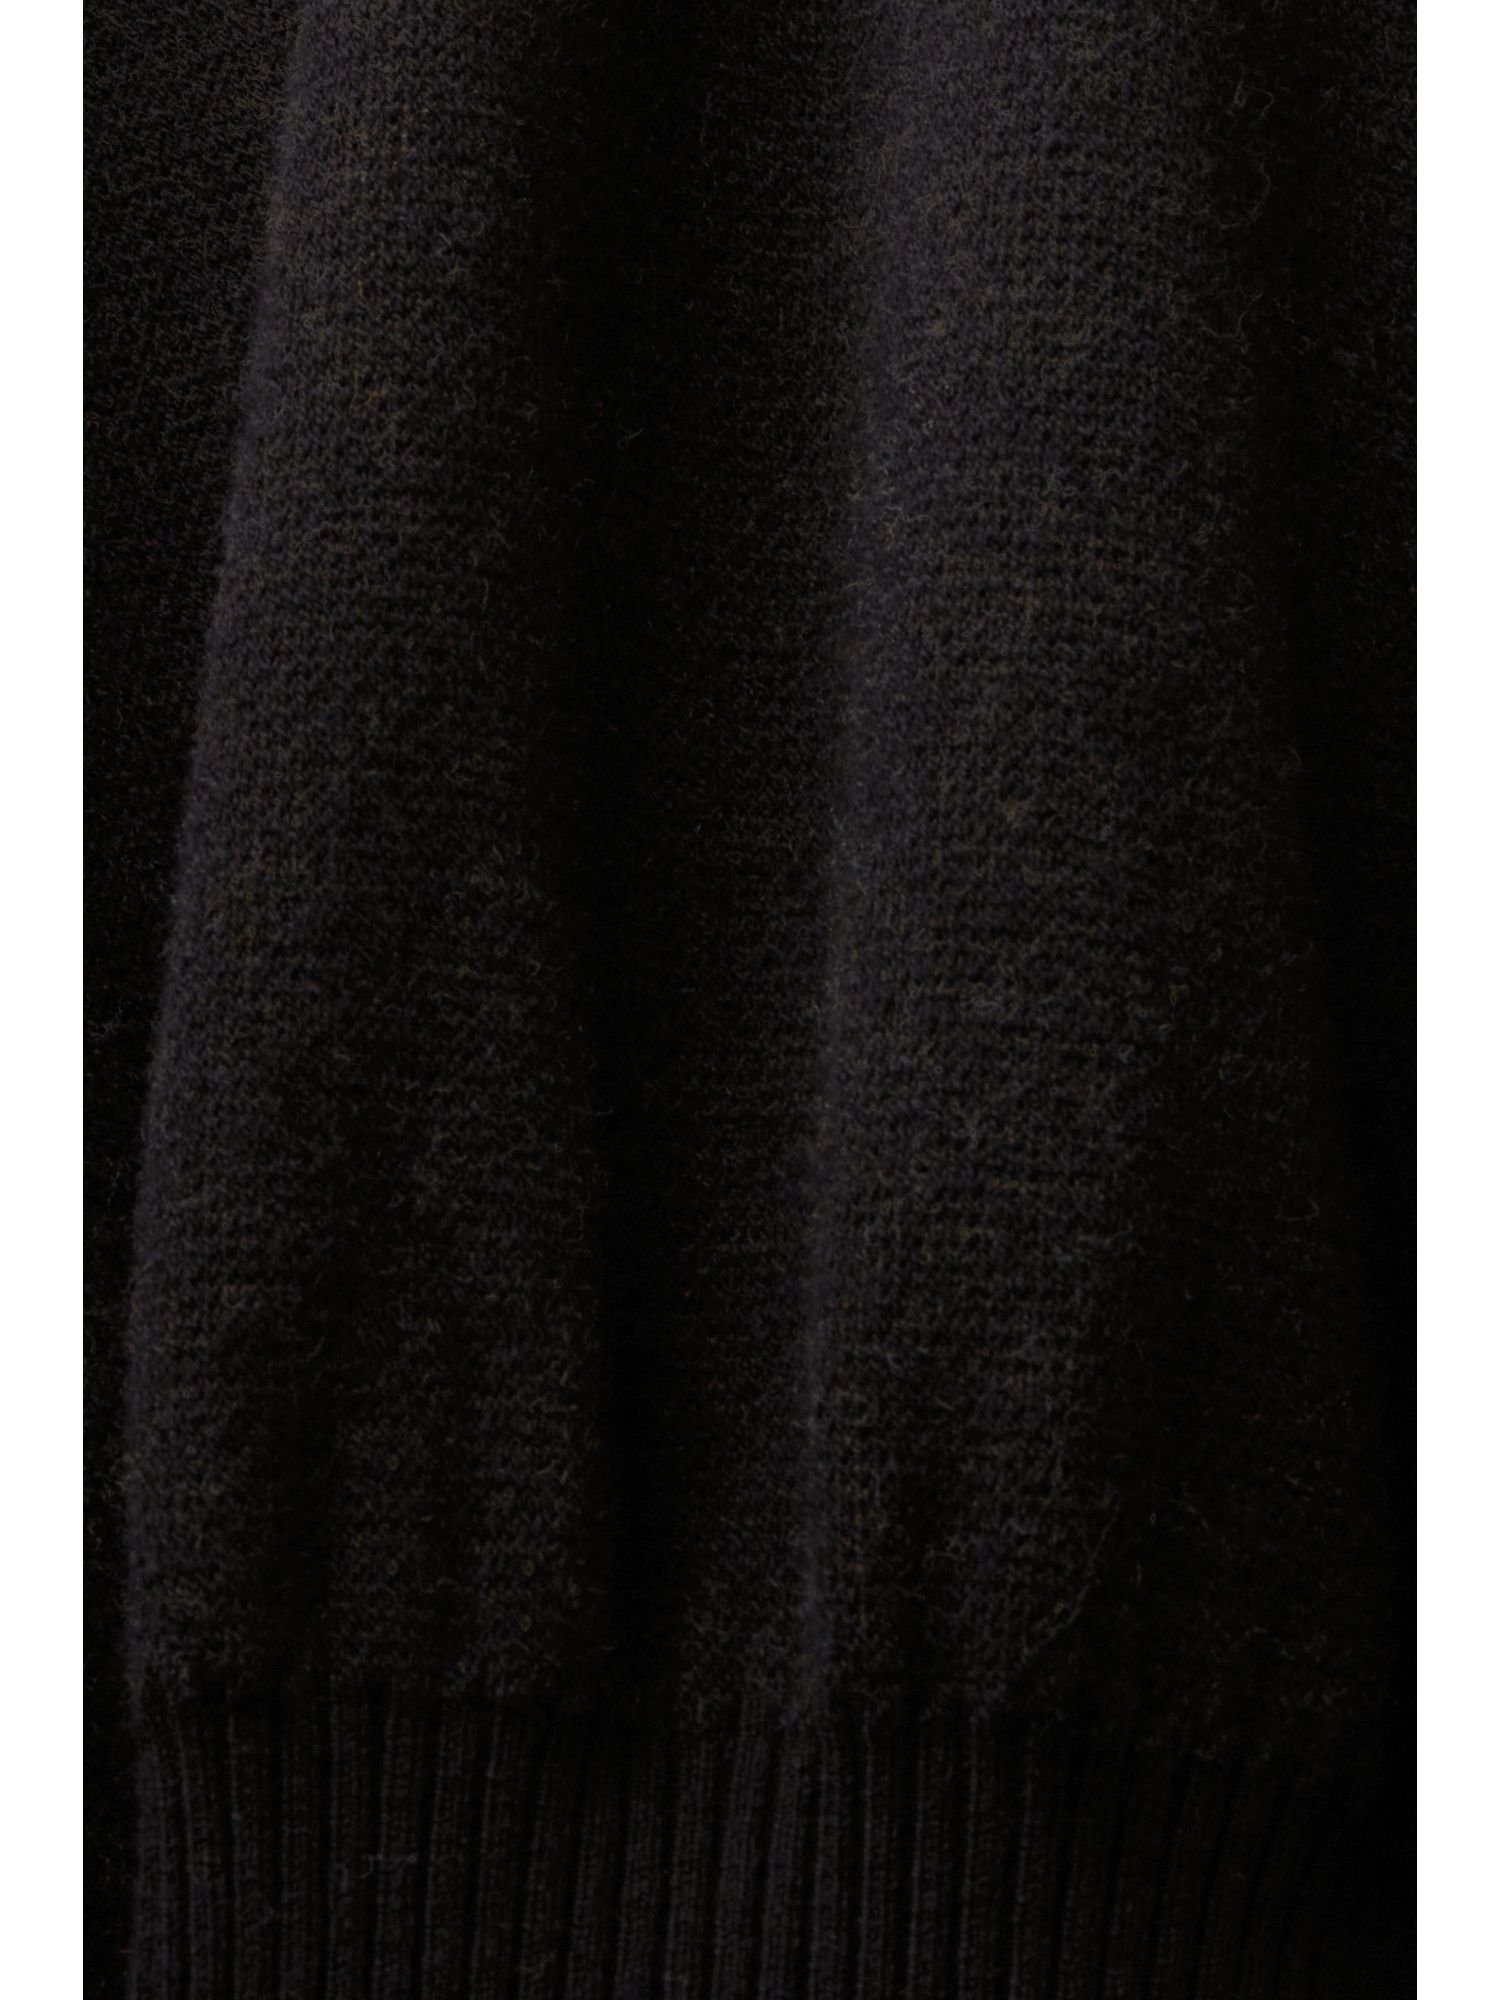 floralem Esprit mit BLACK Minikleid Jacquard-Muster Fit-and-flare-Kleid